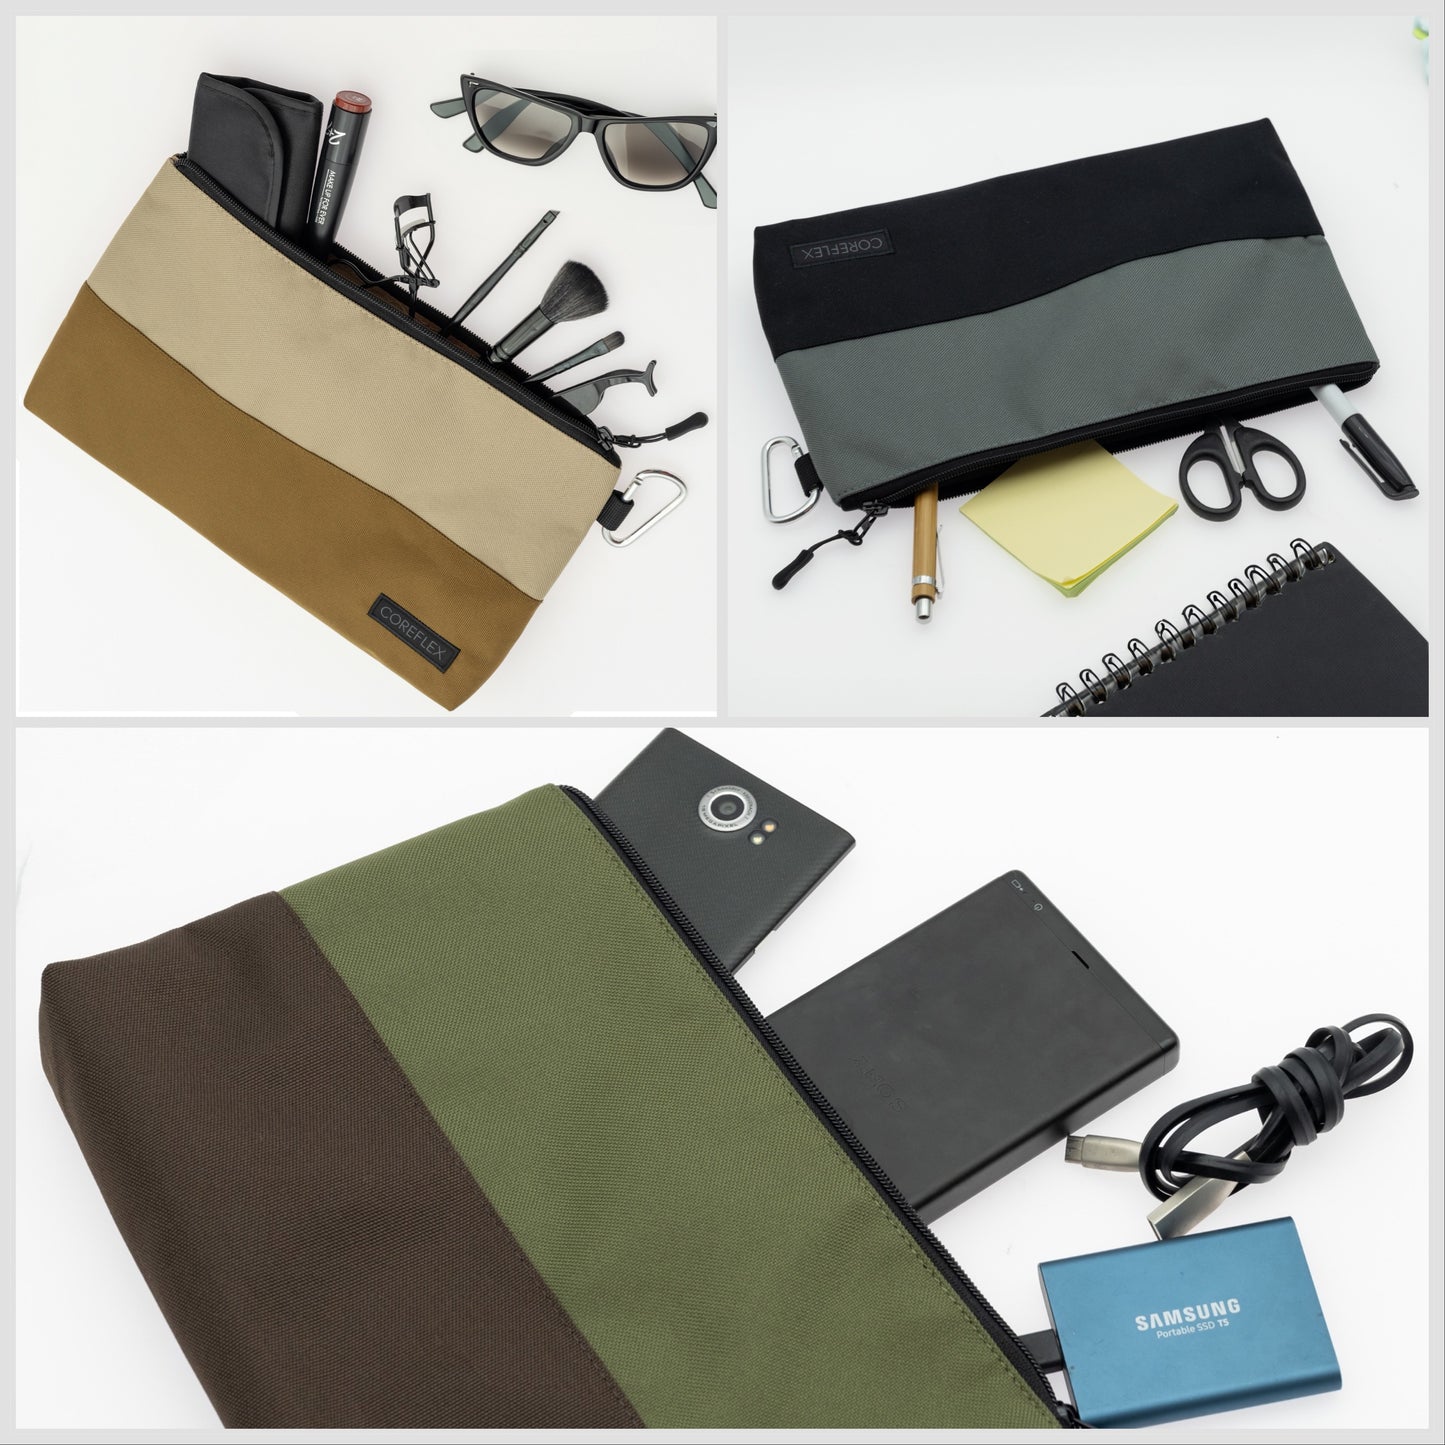 Coreflex 3pack premium Tool Pouch Zipper Bag, Multipurpose Storage pouch. Enhanced Bottom